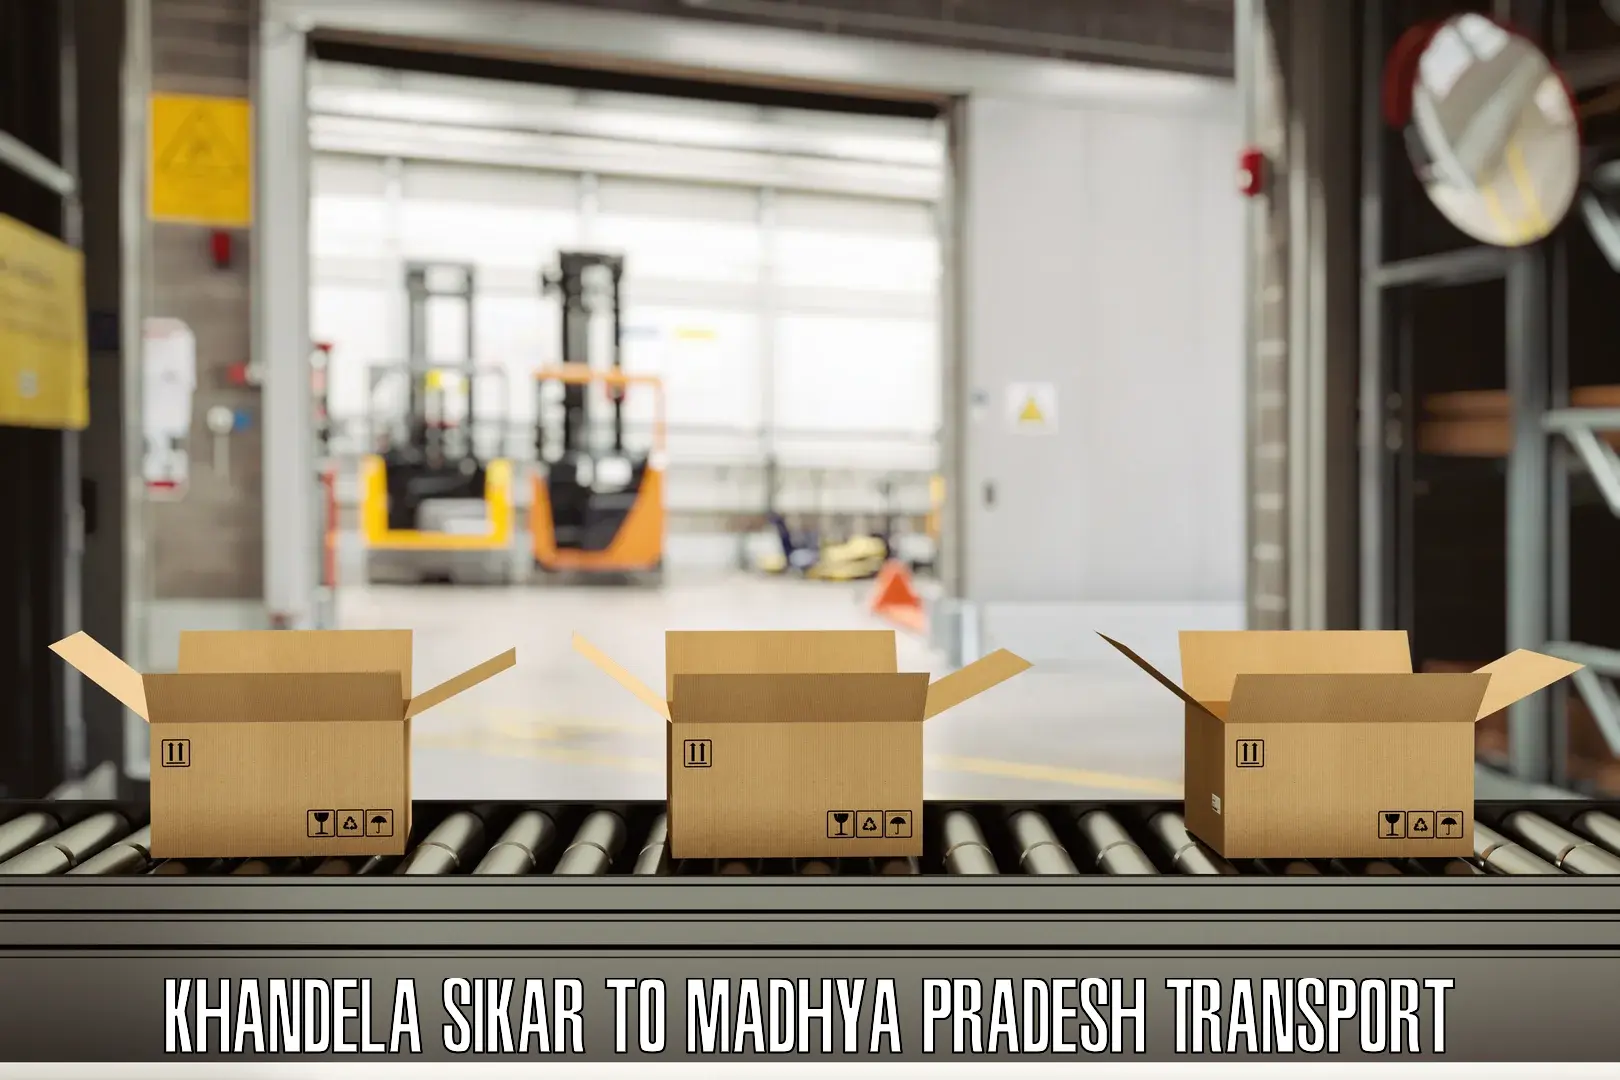 Truck transport companies in India Khandela Sikar to Madhya Pradesh